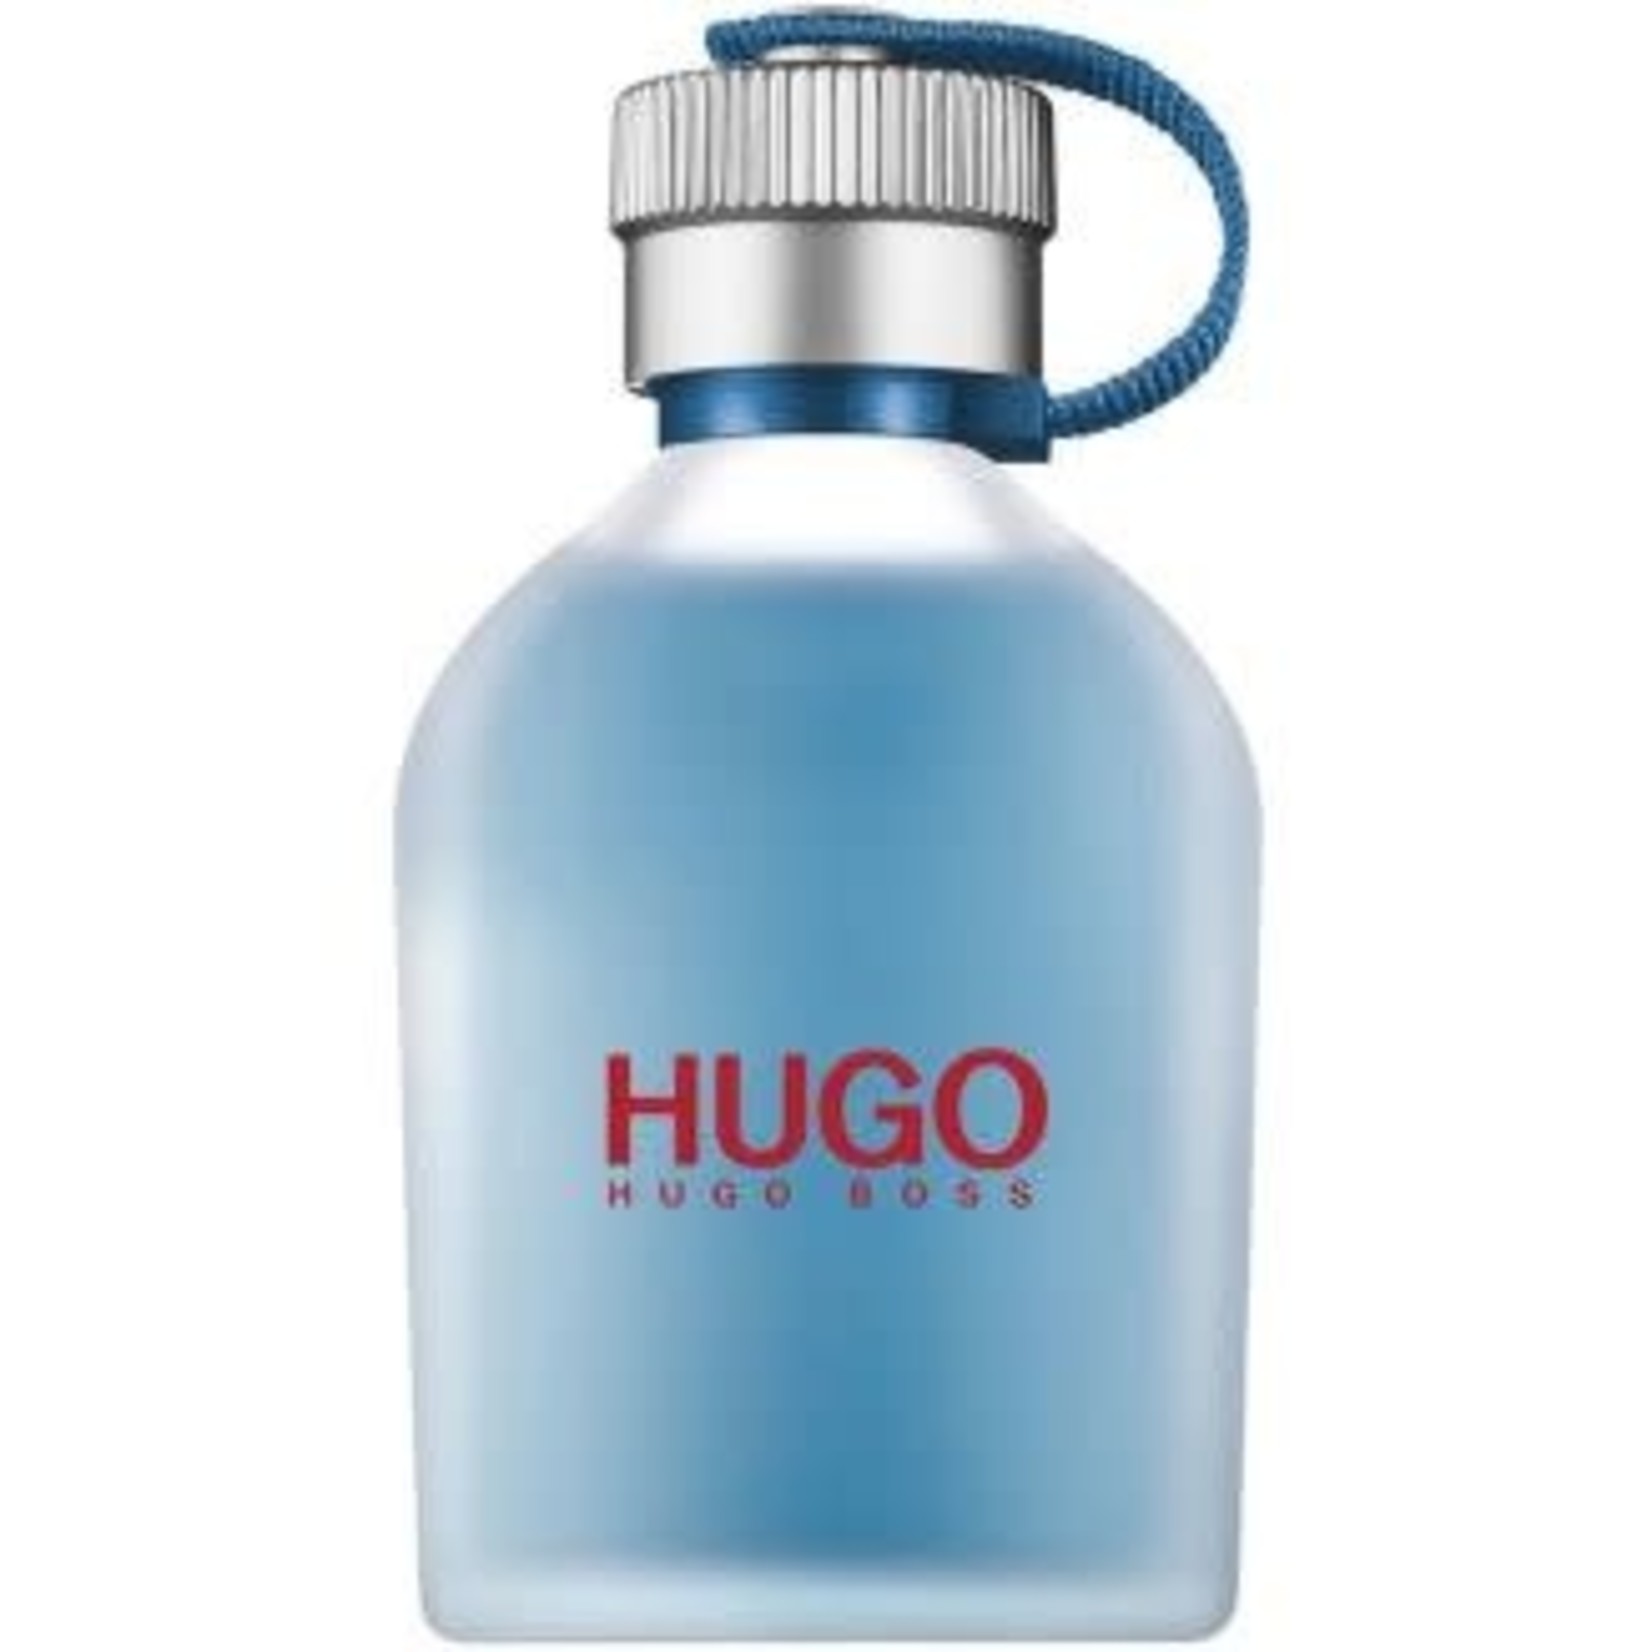 HUGO BOSS HUGO BOSS - HUGO NOW - EAU DE TOILETTE